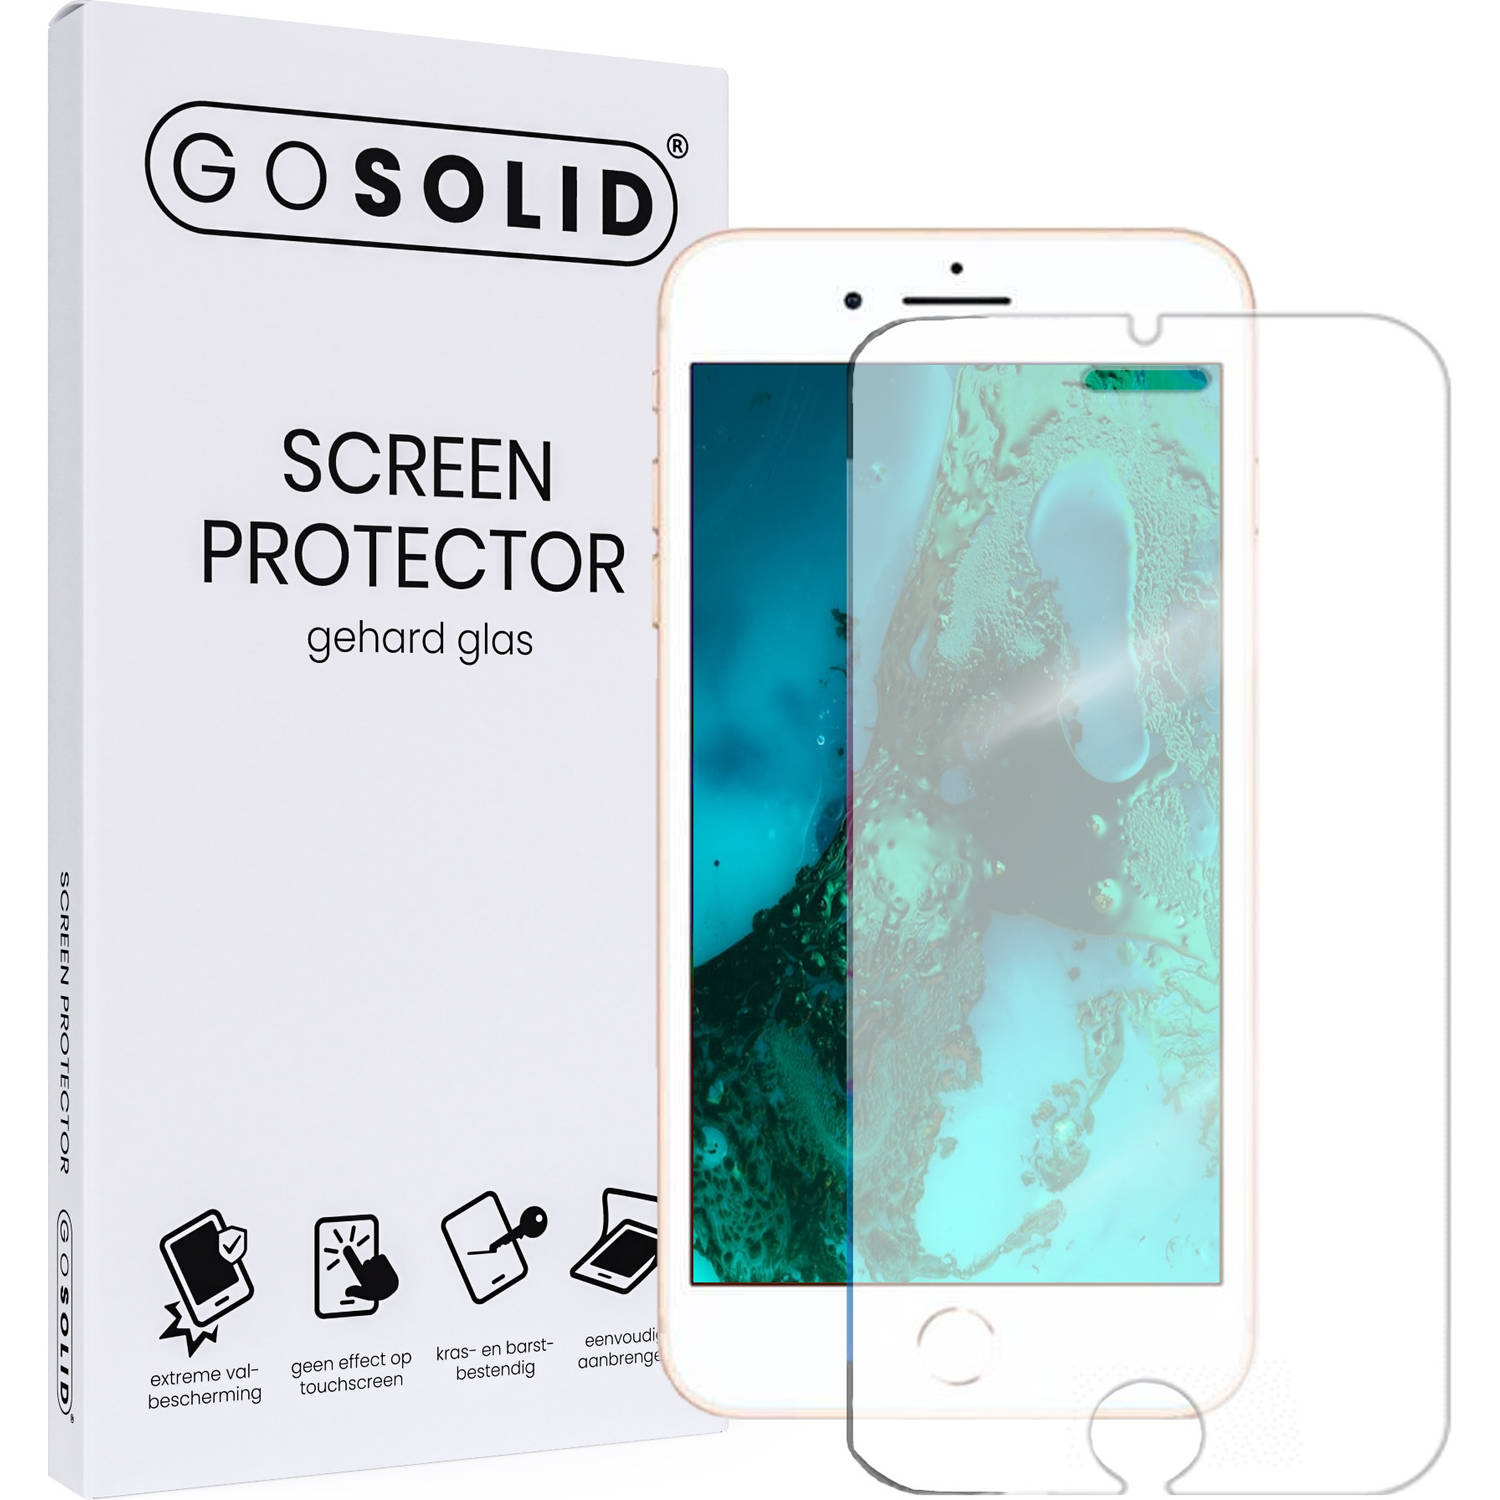 GO SOLID! ® Screenprotector iPhone 6 - Apple - gehard glas